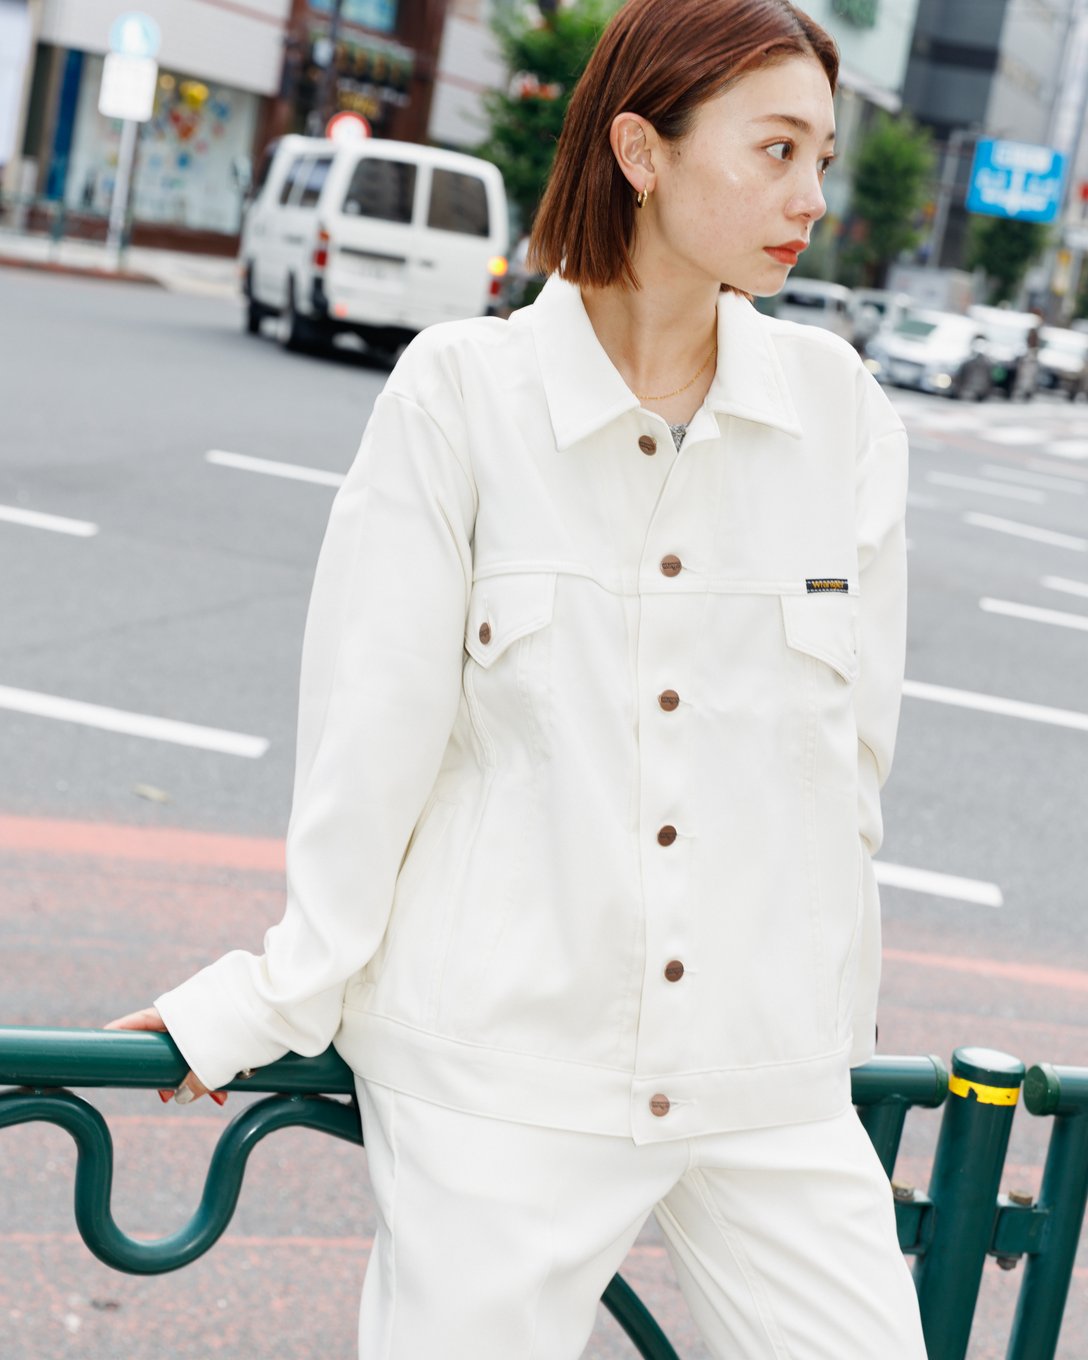 Nハリ×ラングラーの白いセットアップを着用した女性モデル